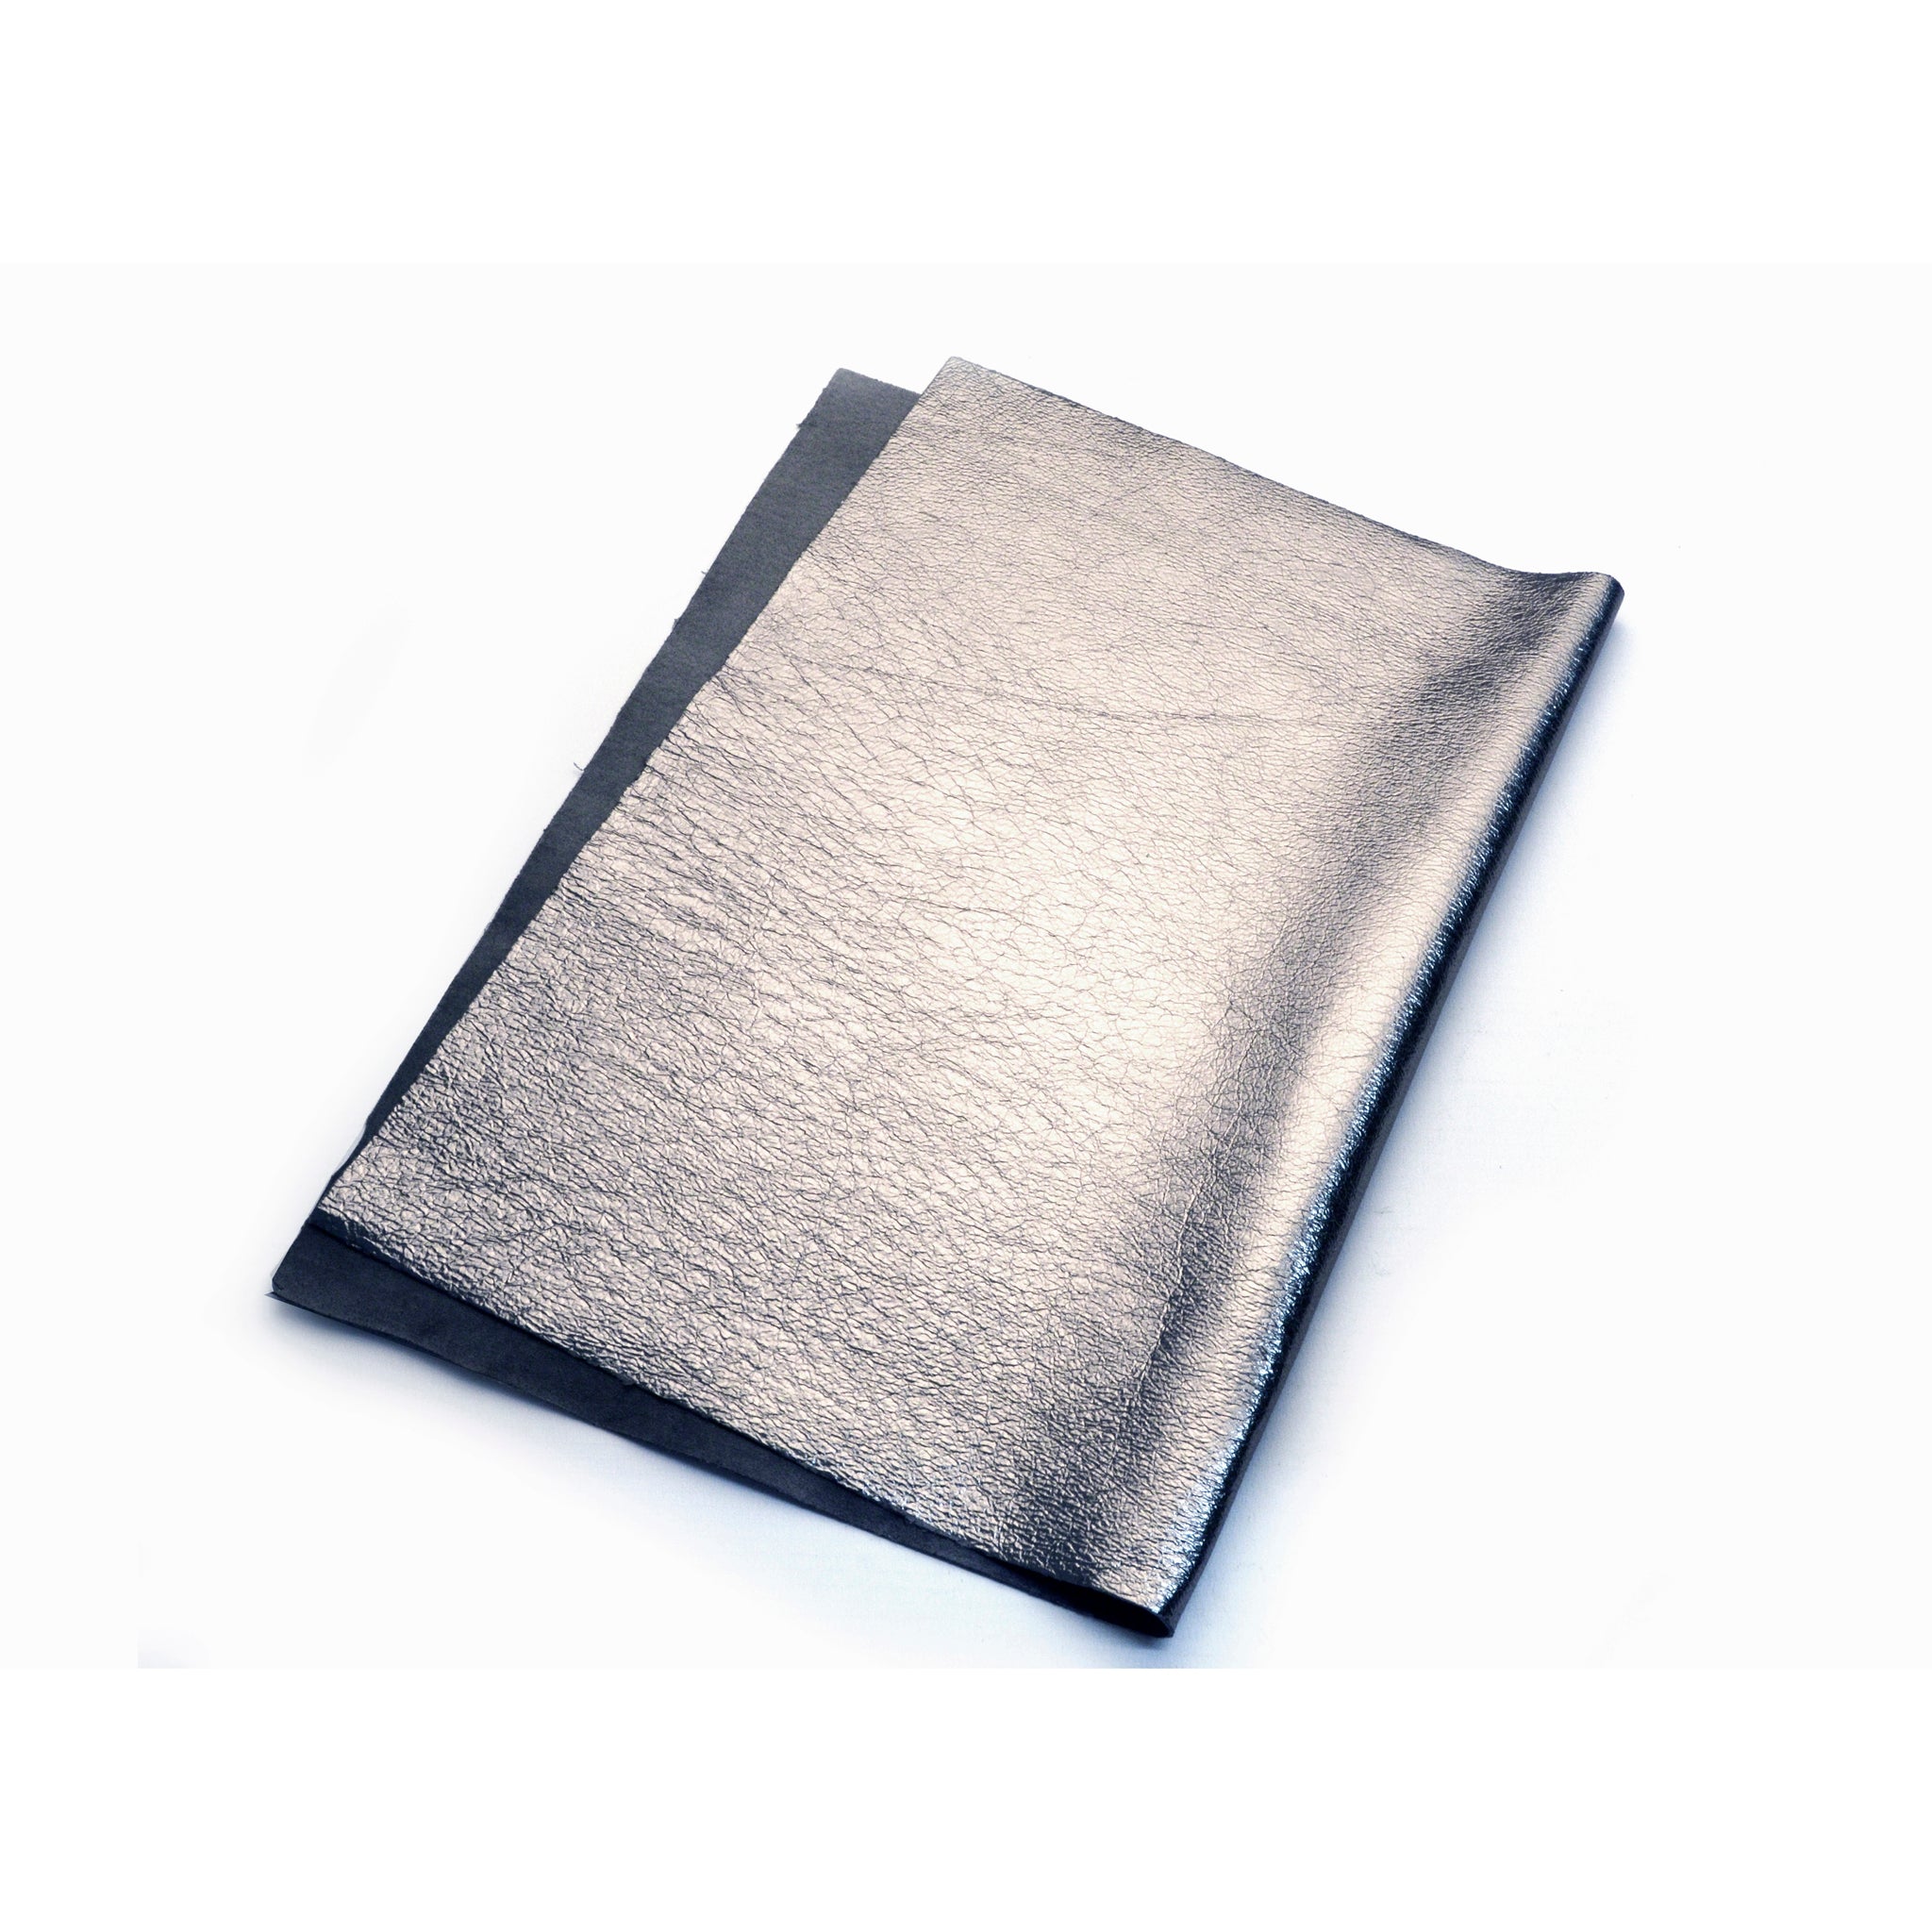 Pewter Metallic Foil Leather